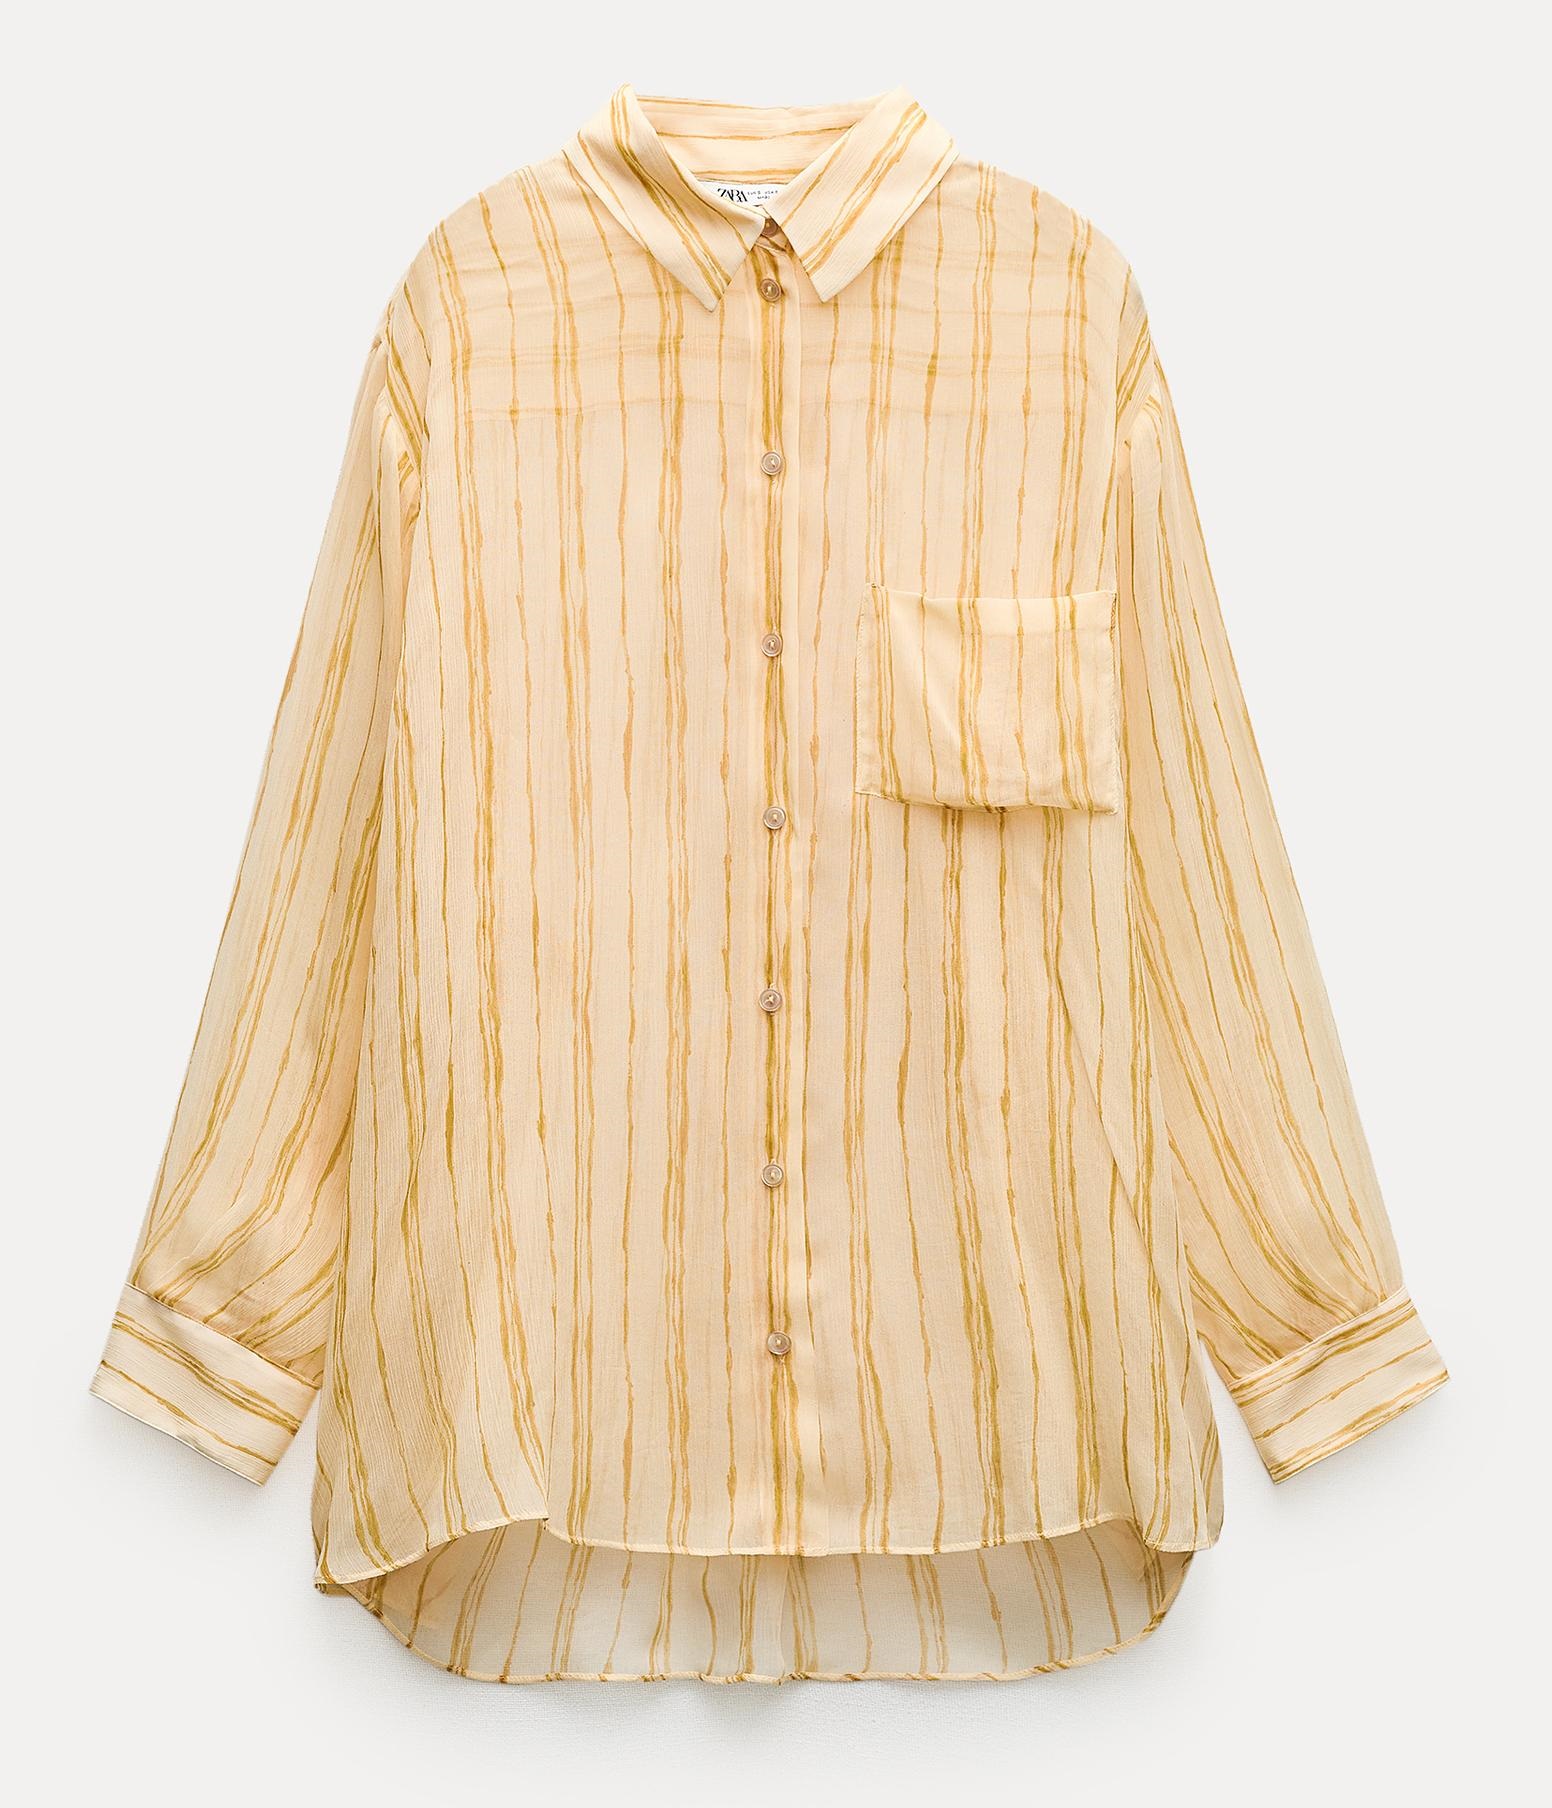 Рубашка Zara Zw Collection Striped With Pocket, мультиколор рубашка zara zw collection striped with pocket мультиколор